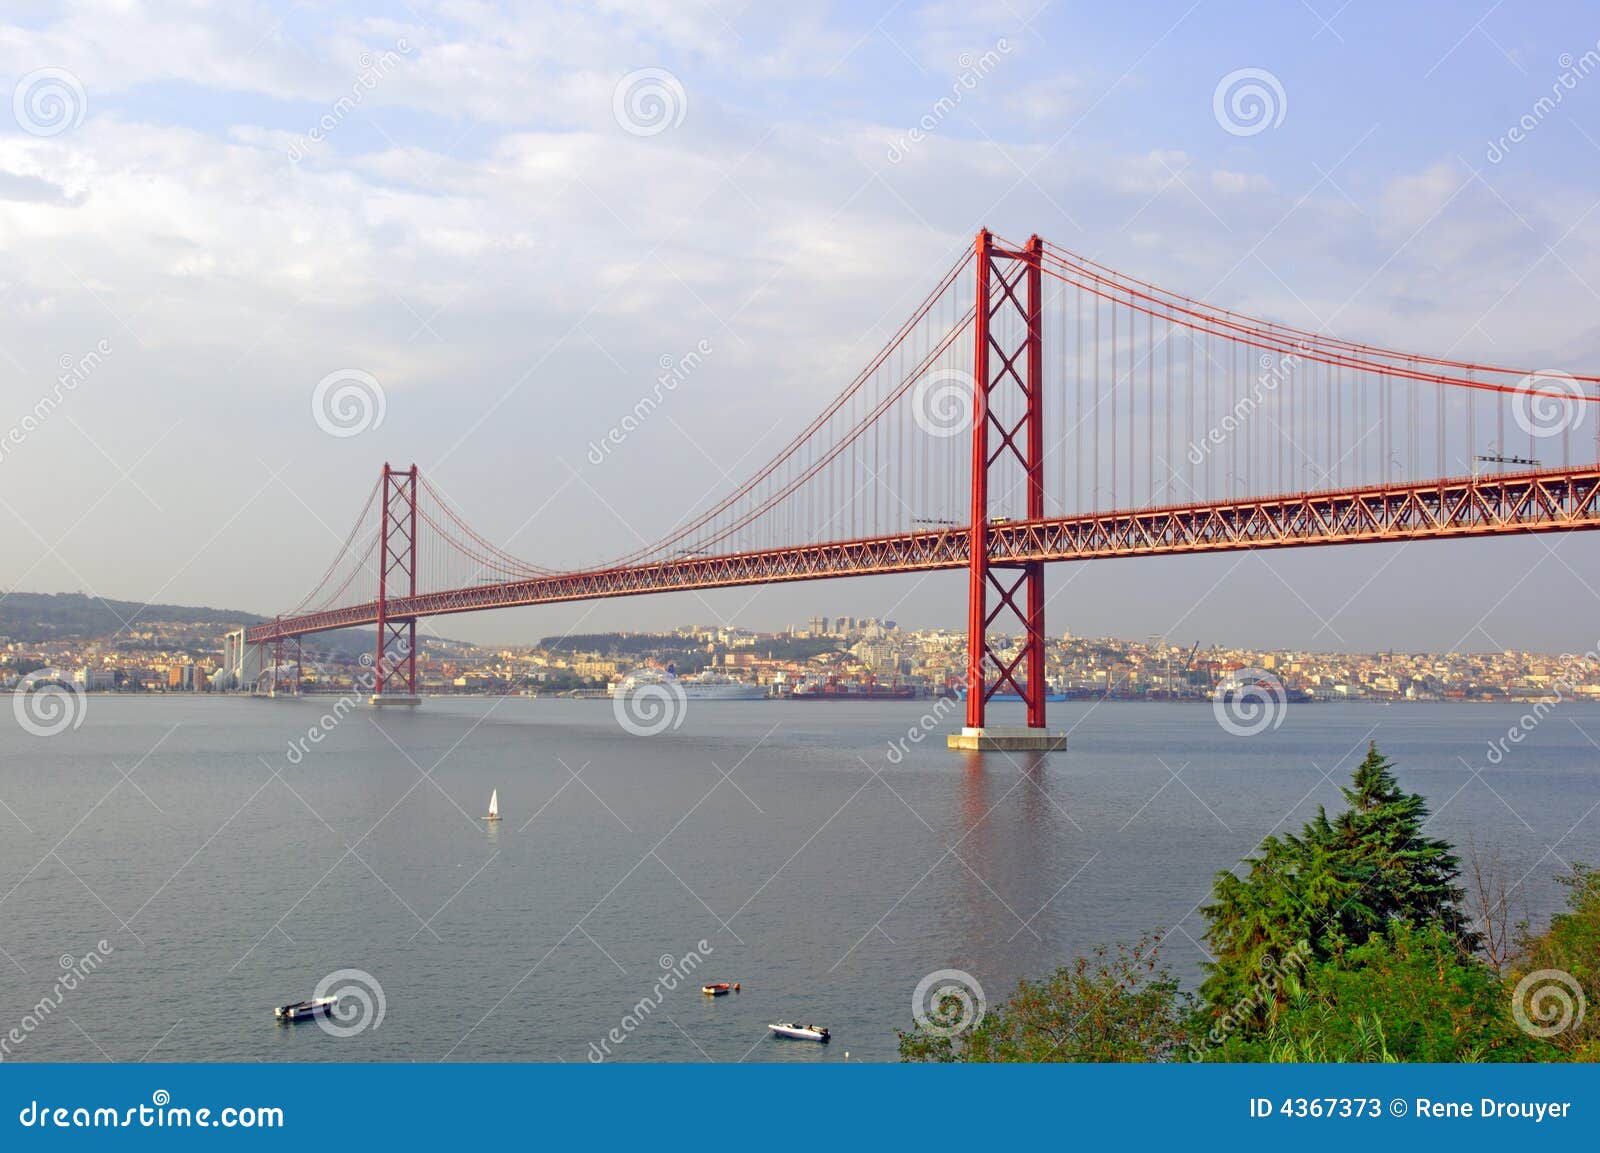 portugal, lisbon: 25 abril bridge